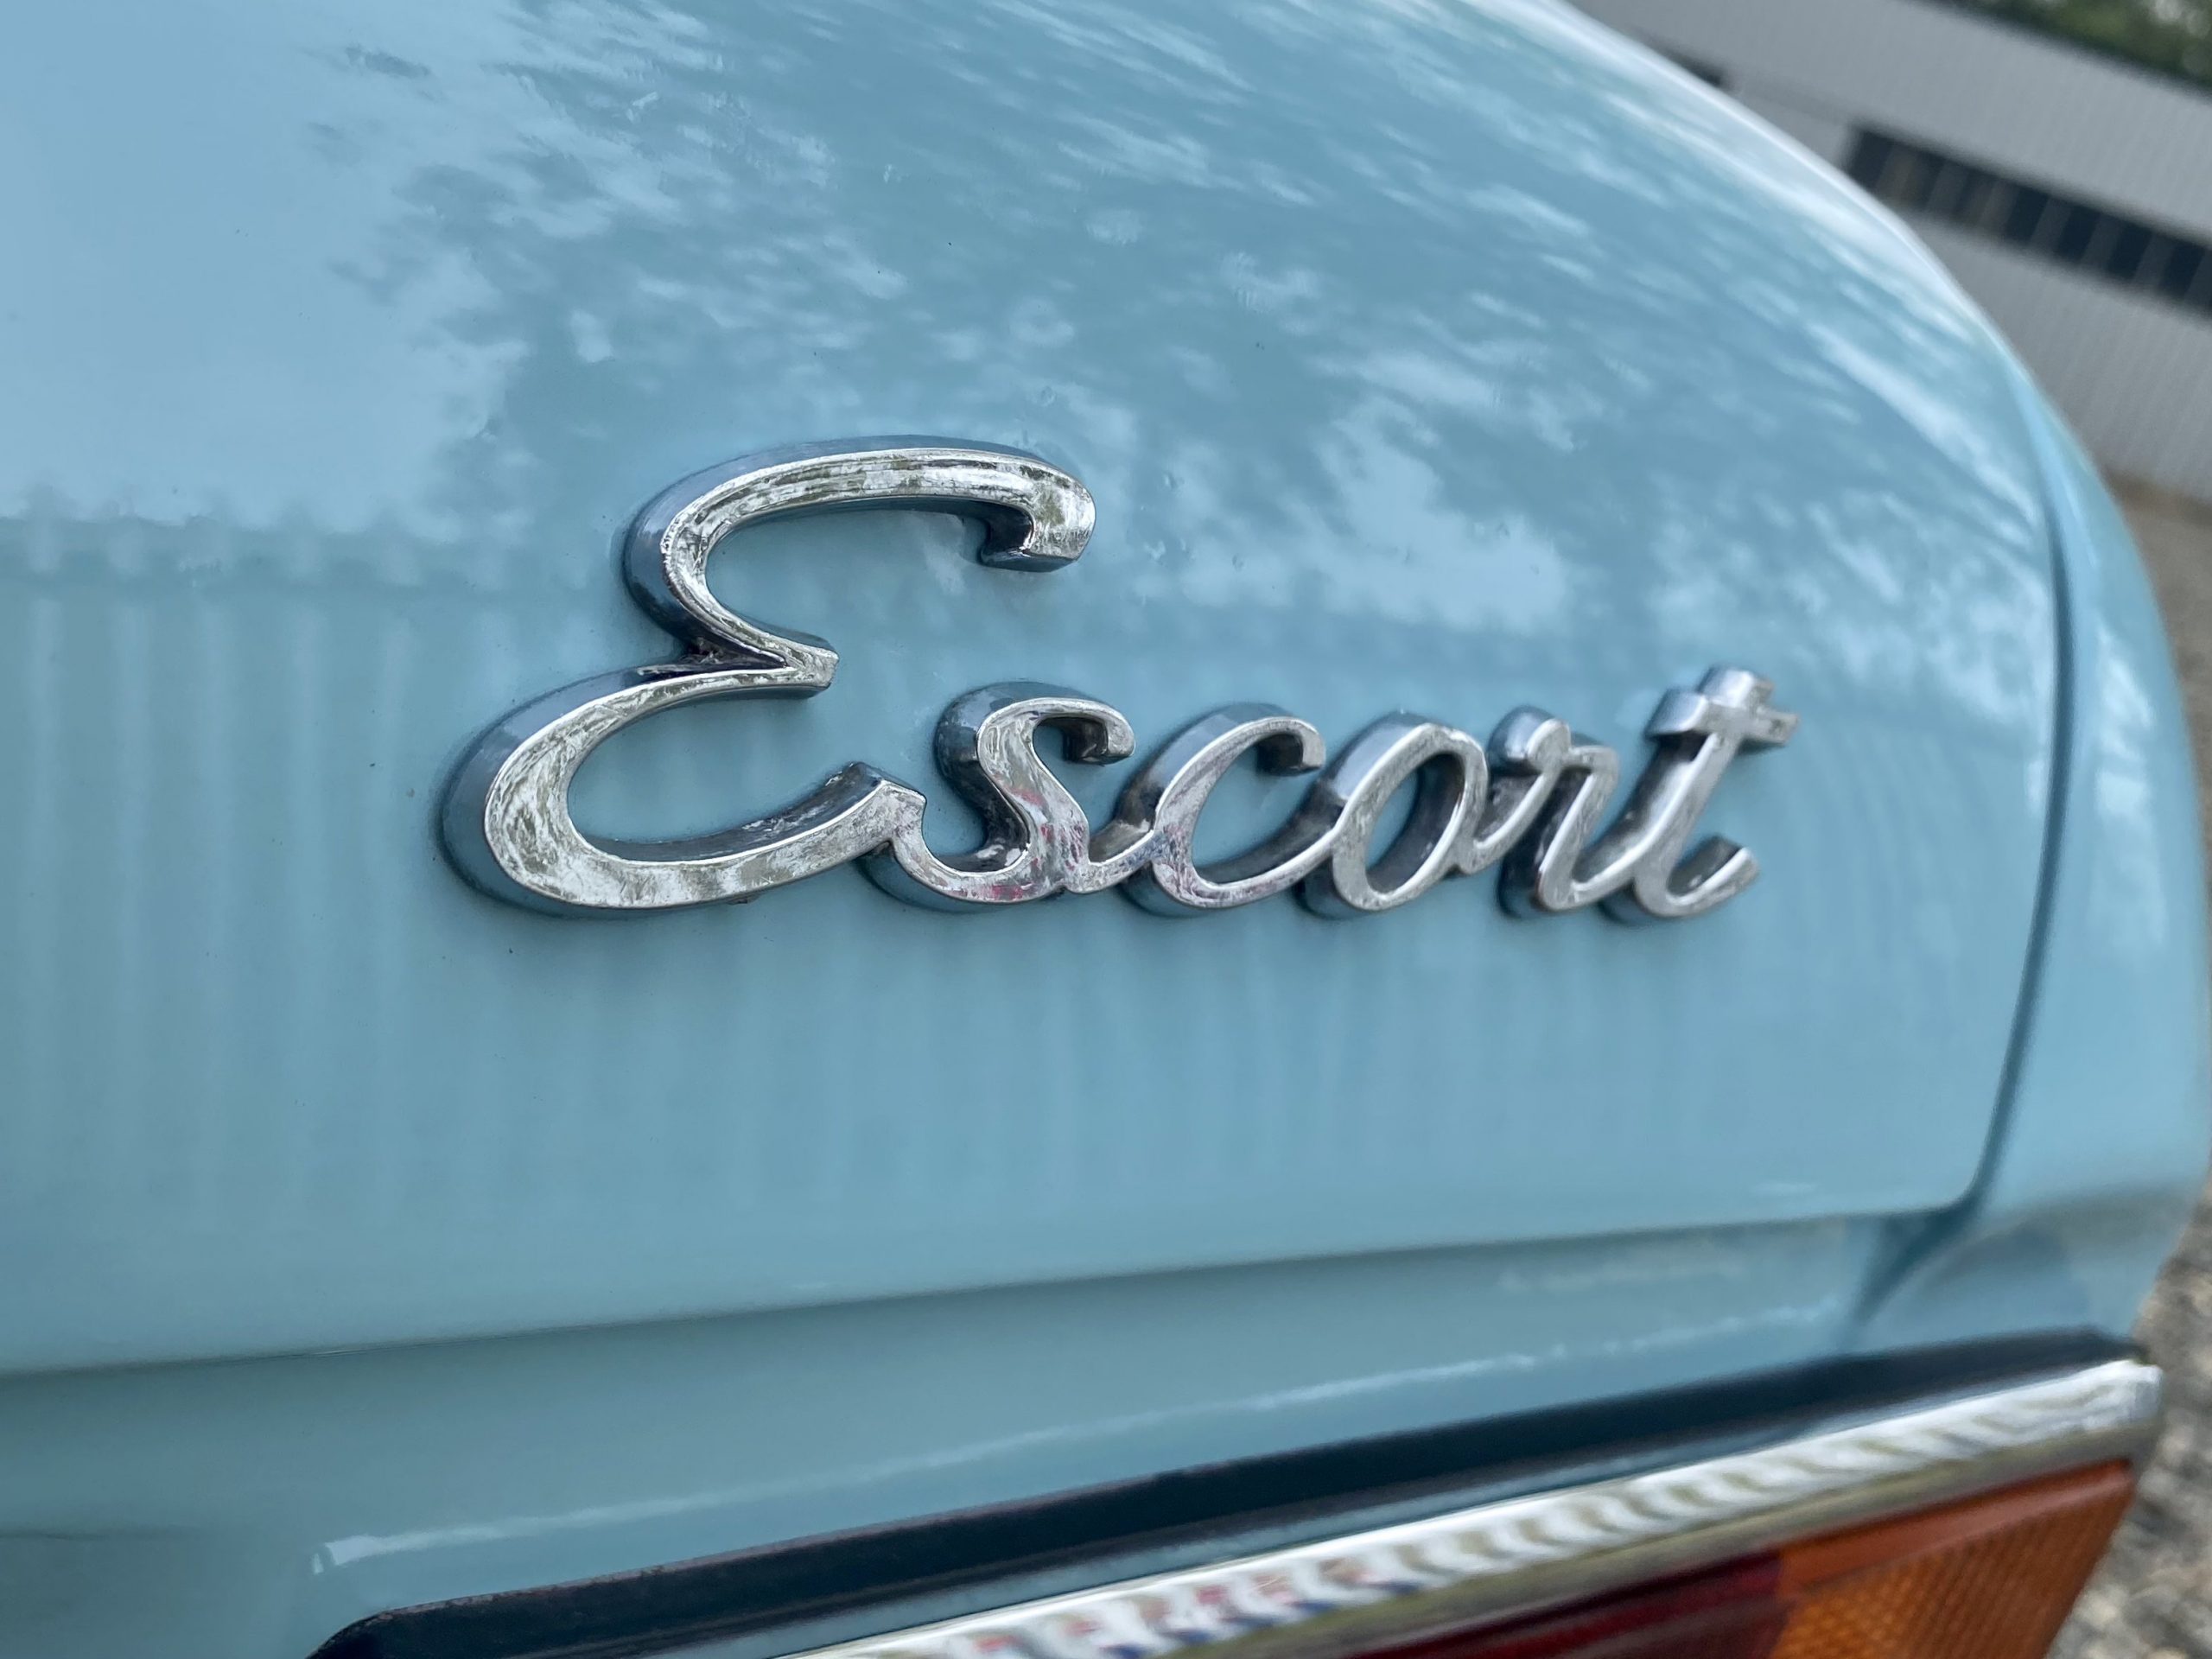 Ford Escort mk1 - Image 24 of 38